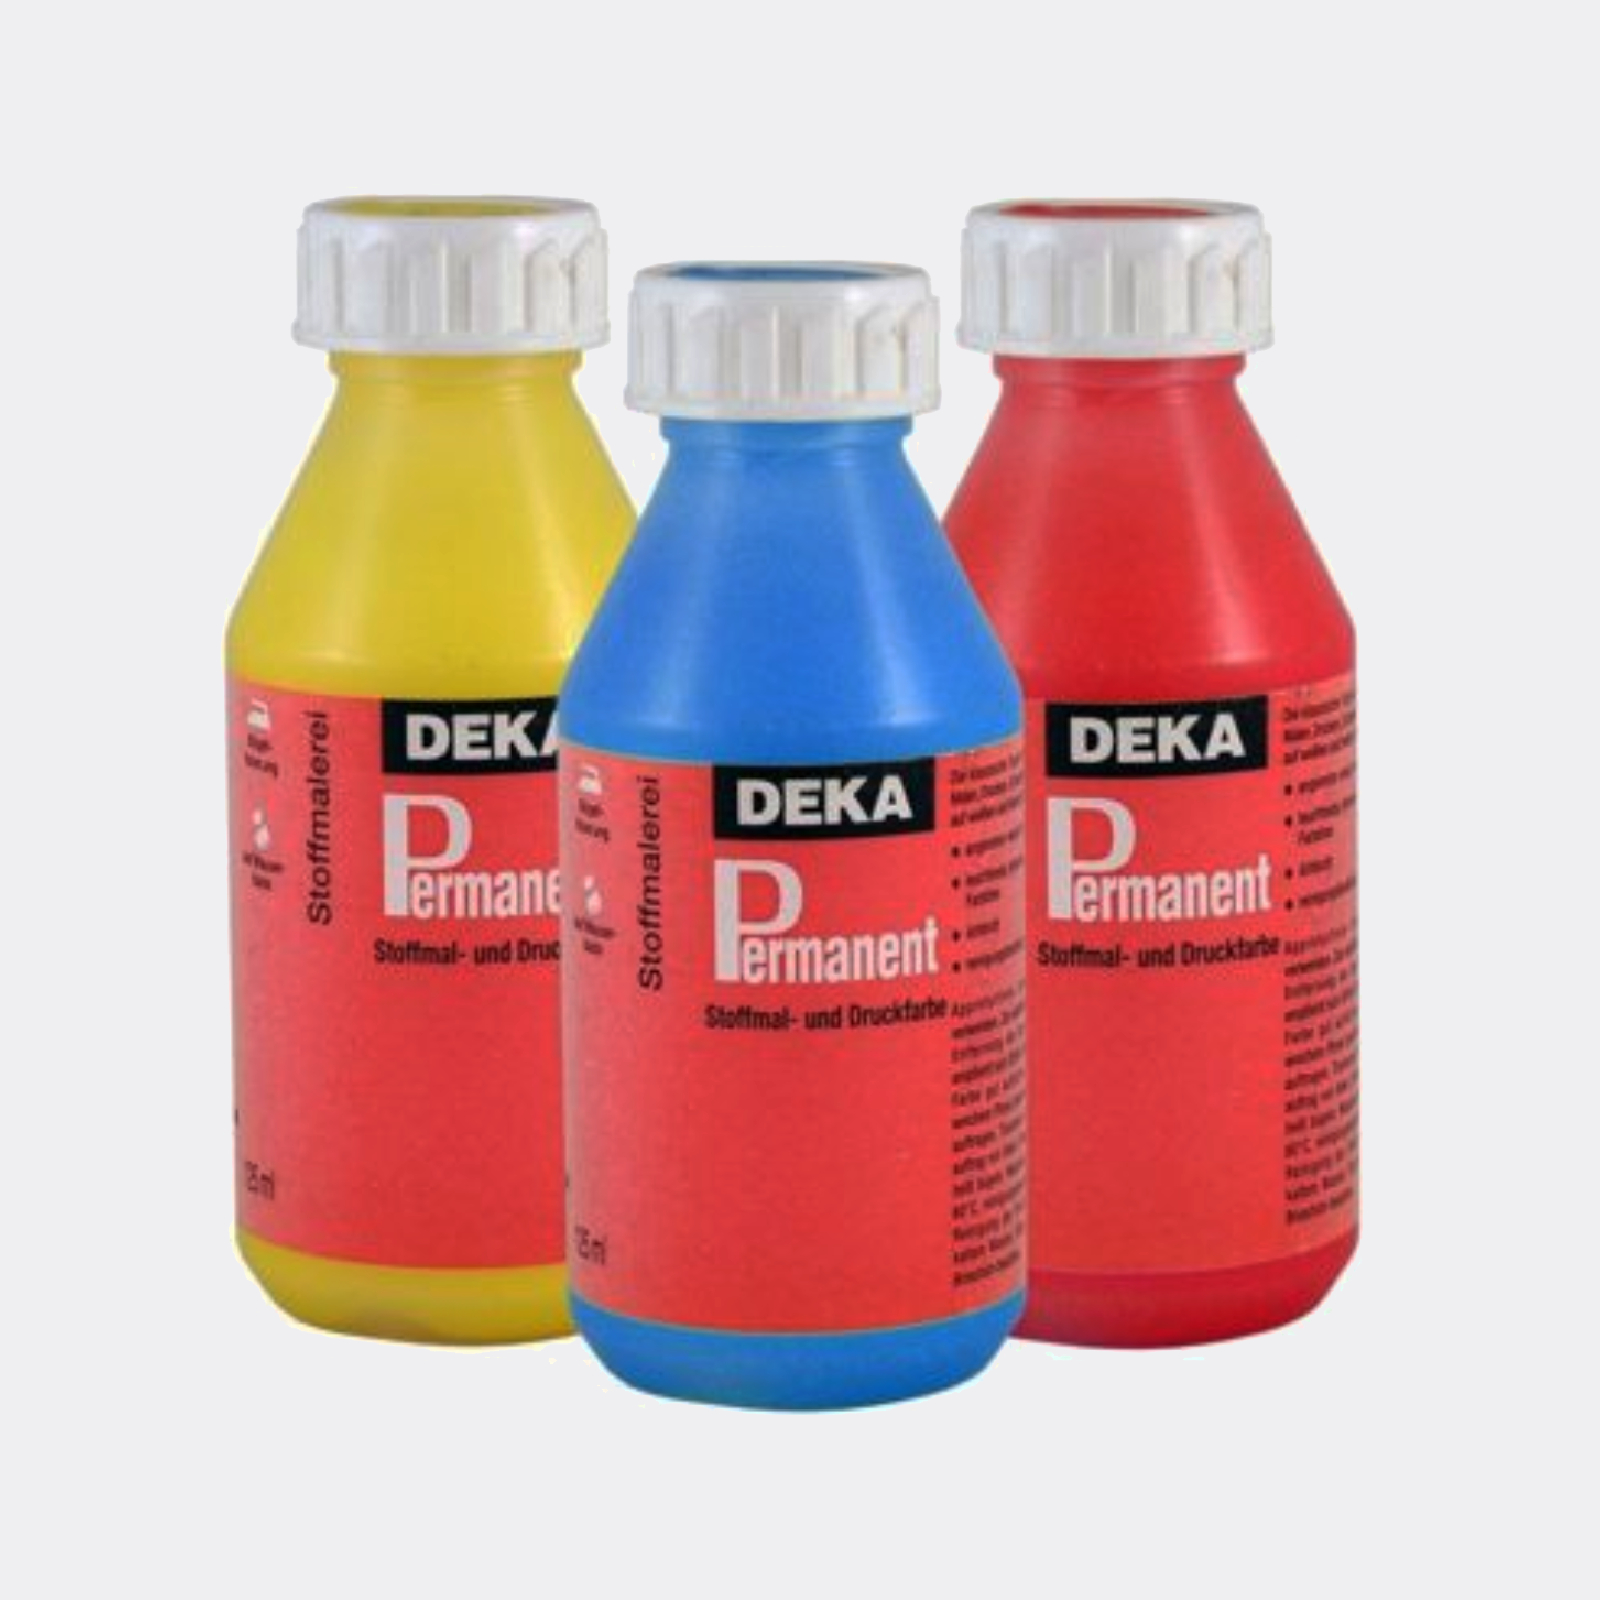 Deka - Permanent, Colore per stoffa